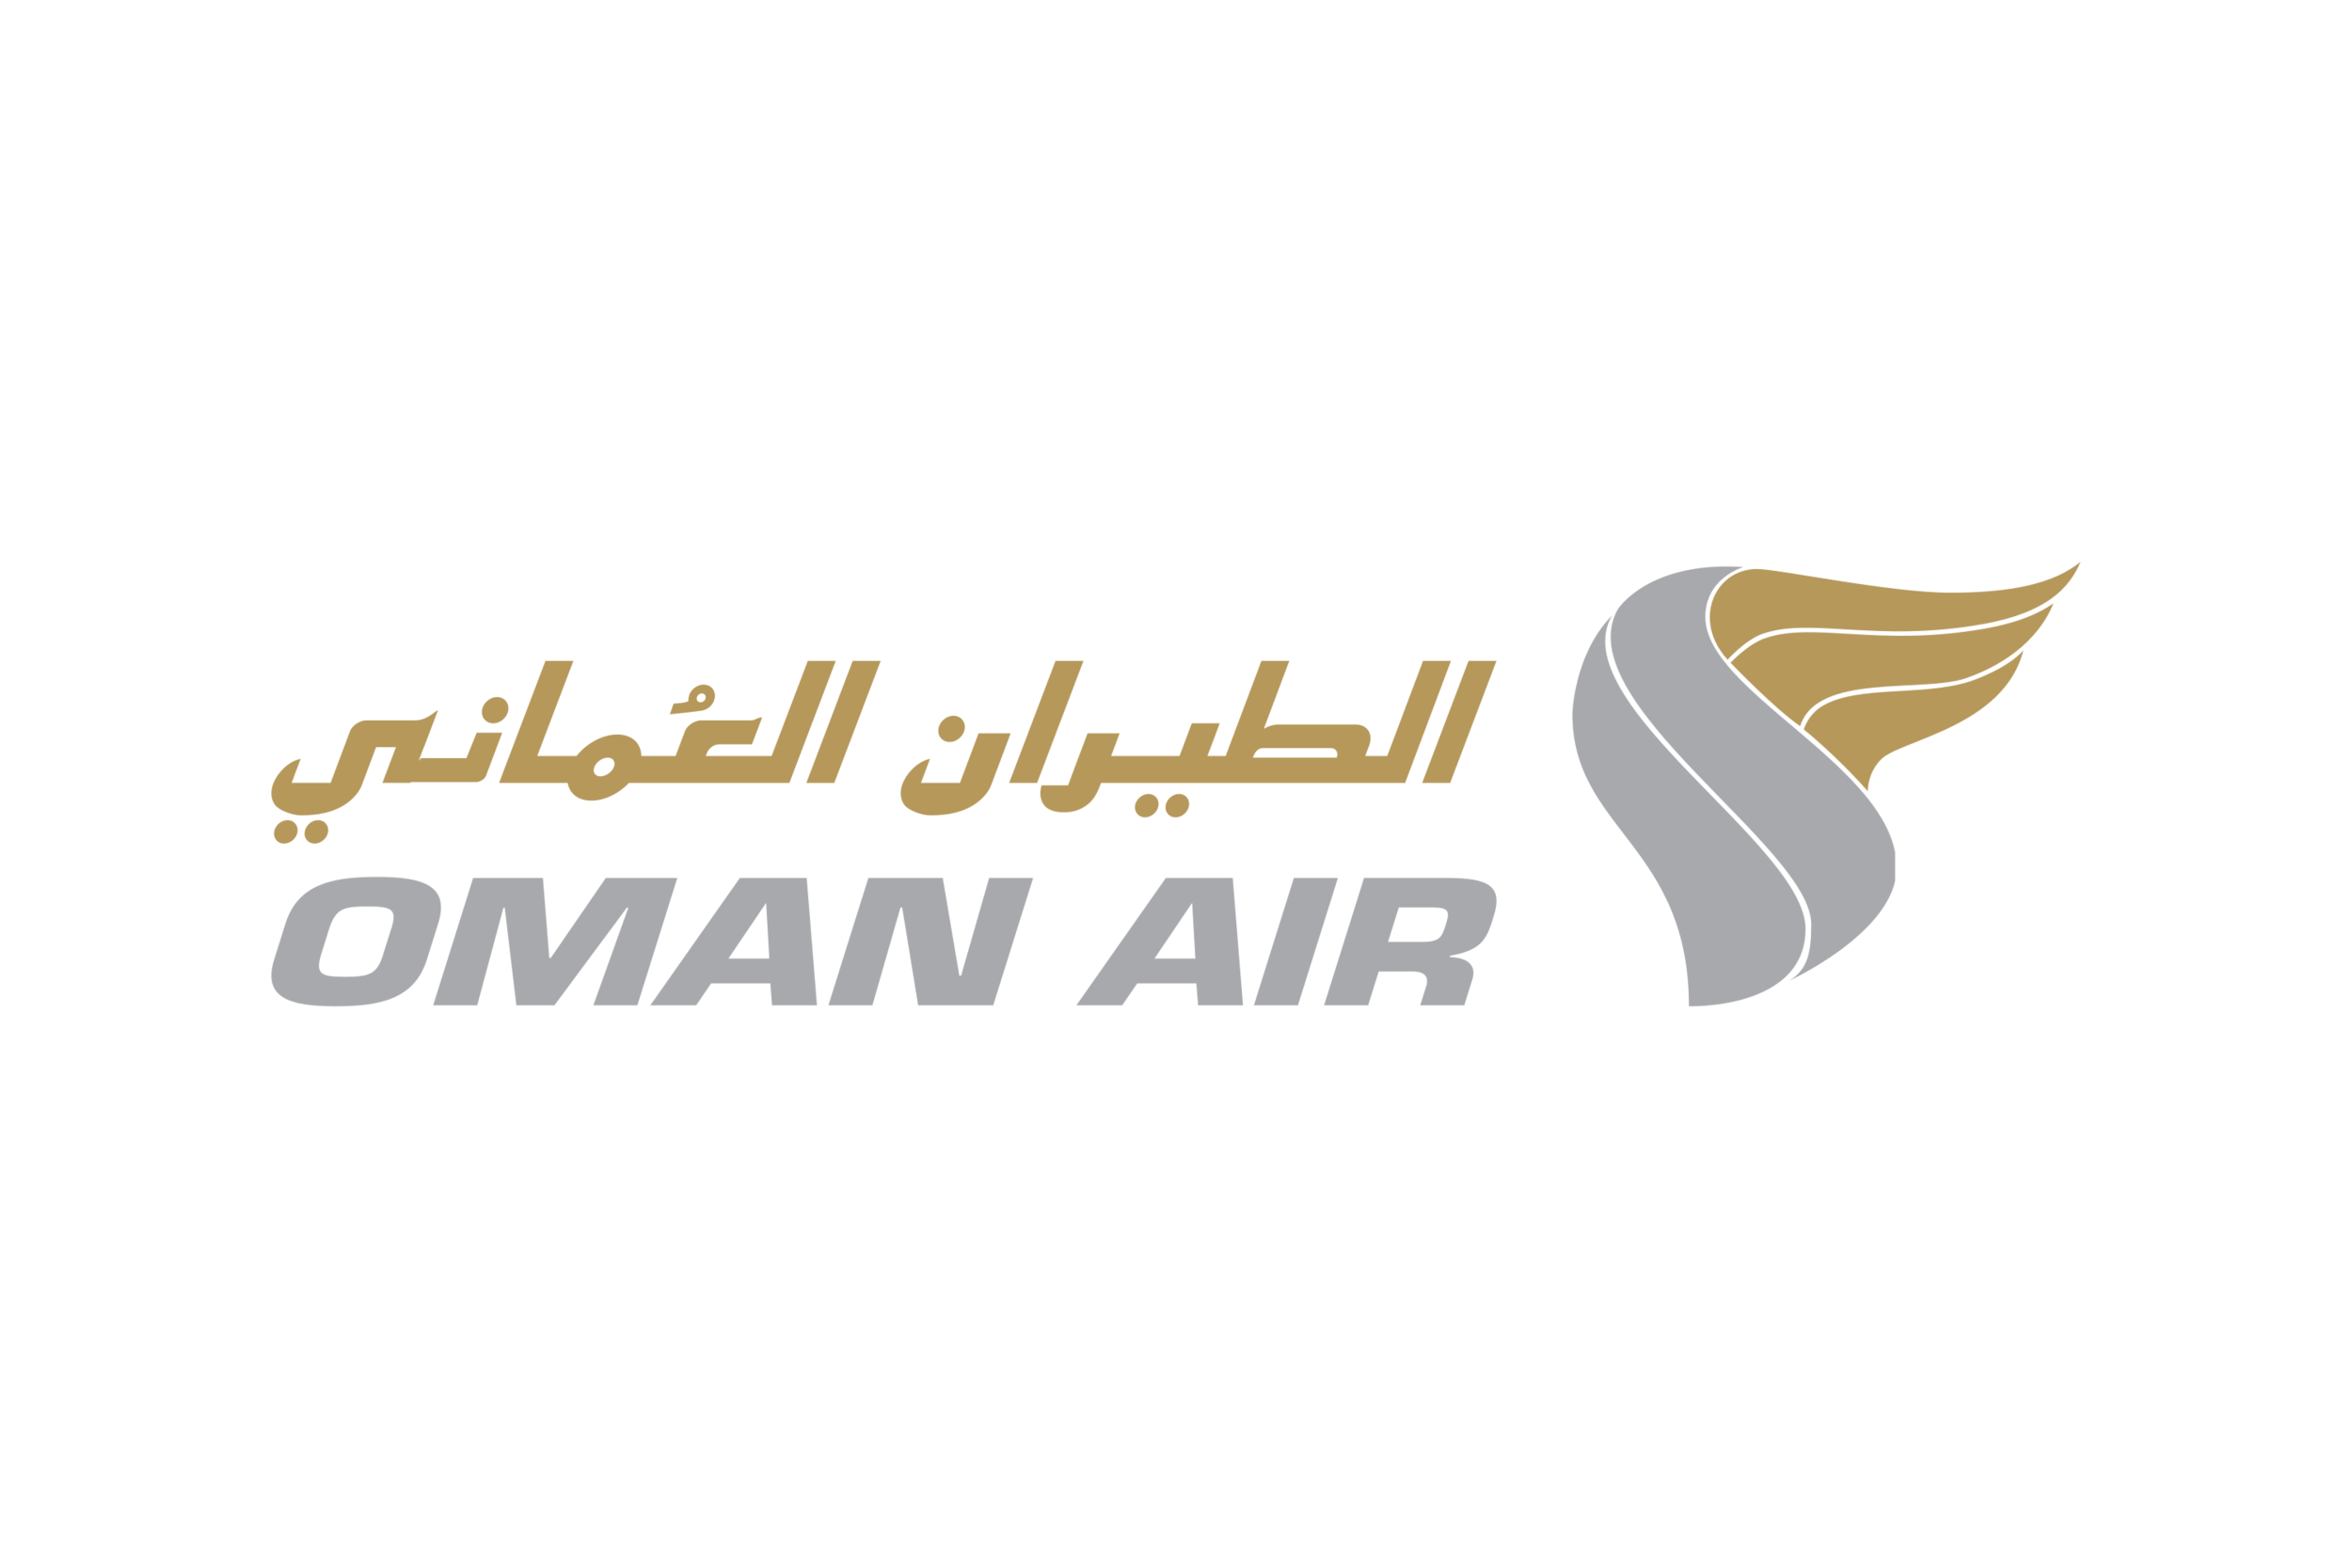 Tours Al Maamari - Oman Air